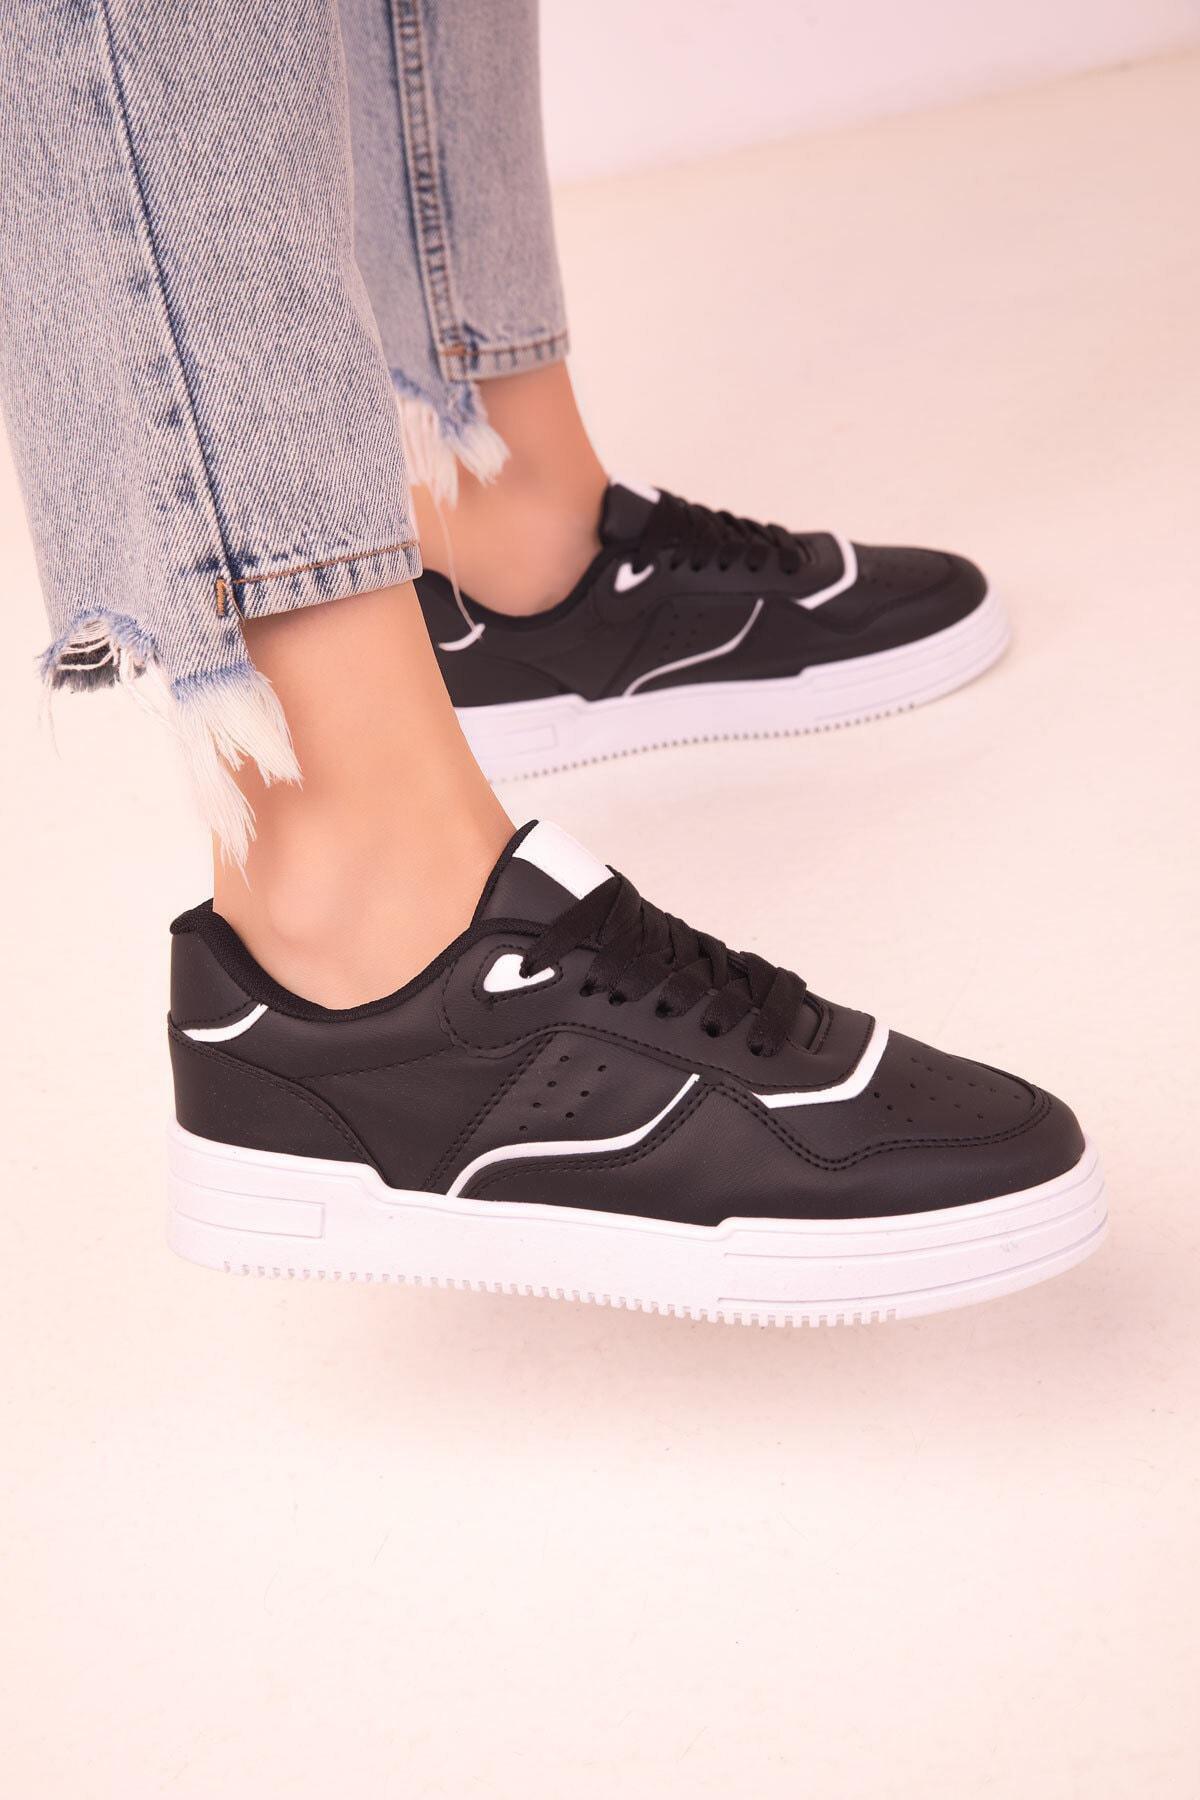 SOHO - Black And White Sneakers